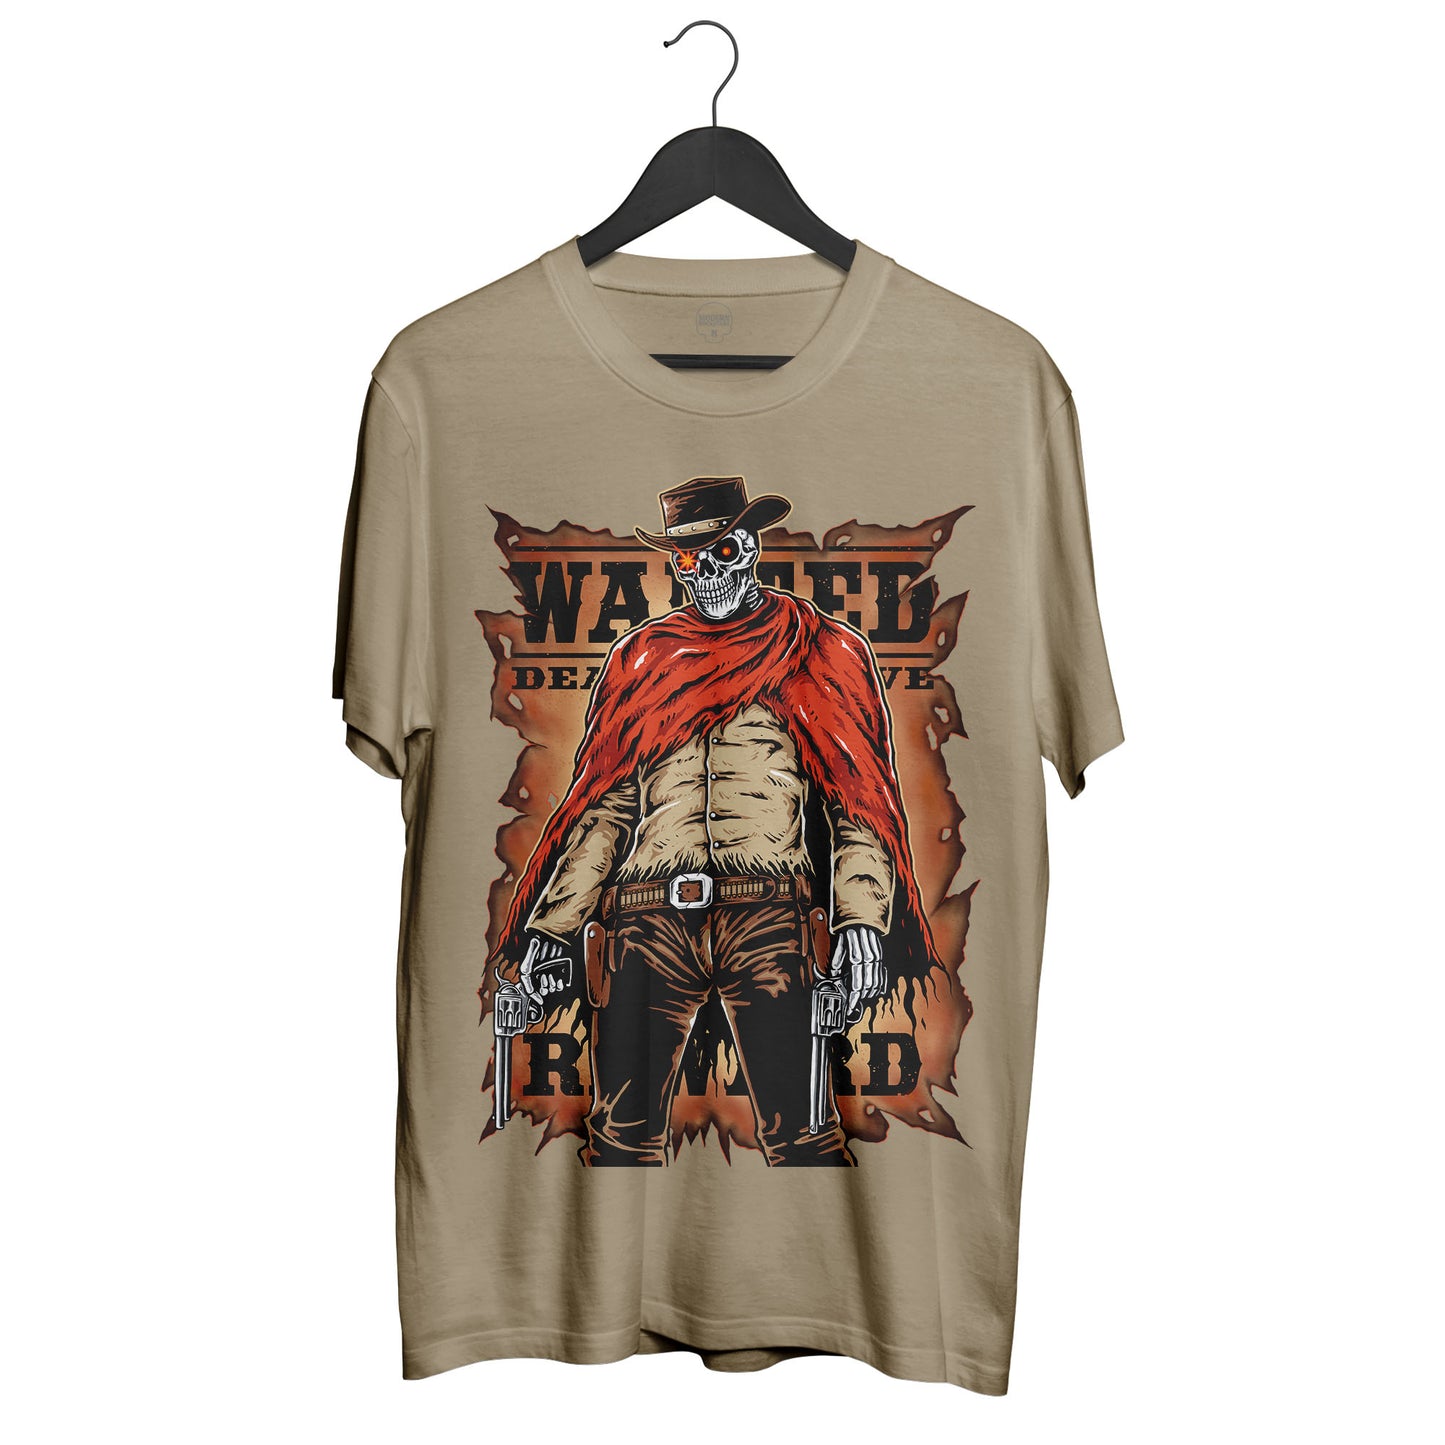 THE WANTED ROCKSTAR T-shirt - Modern Rockstars